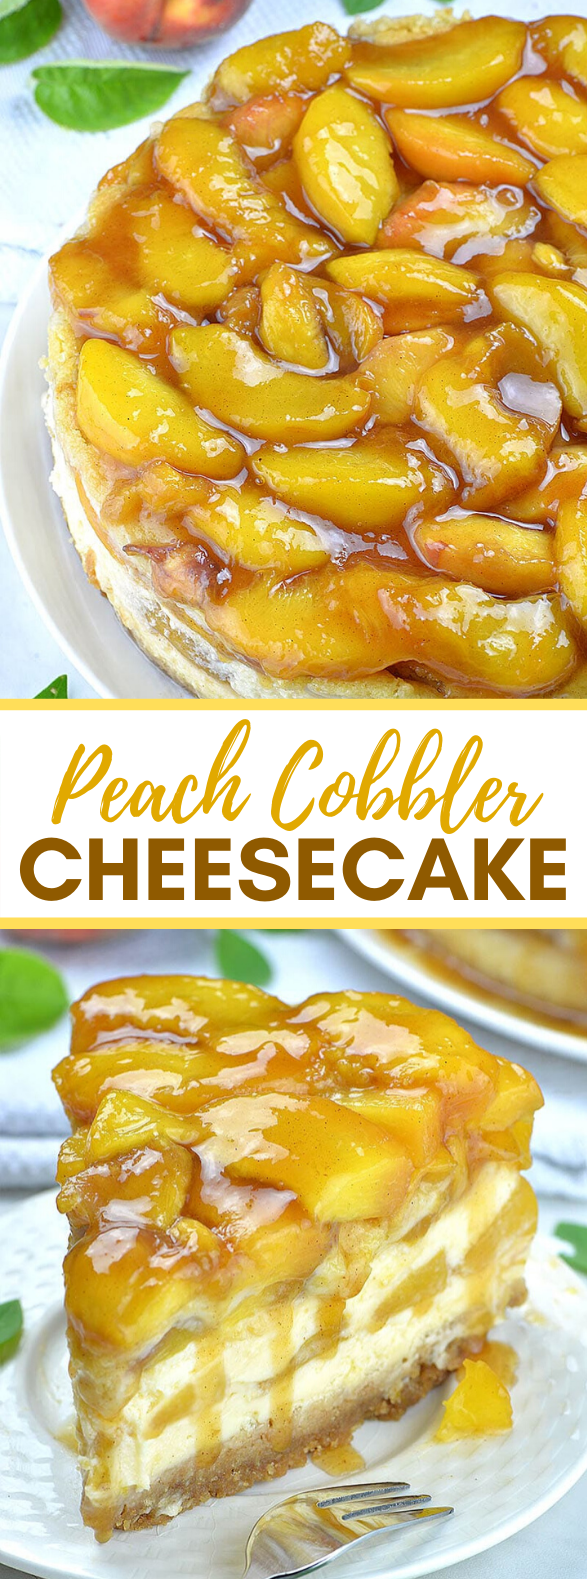 Peach Cobbler Cheesecake #desserts #cake